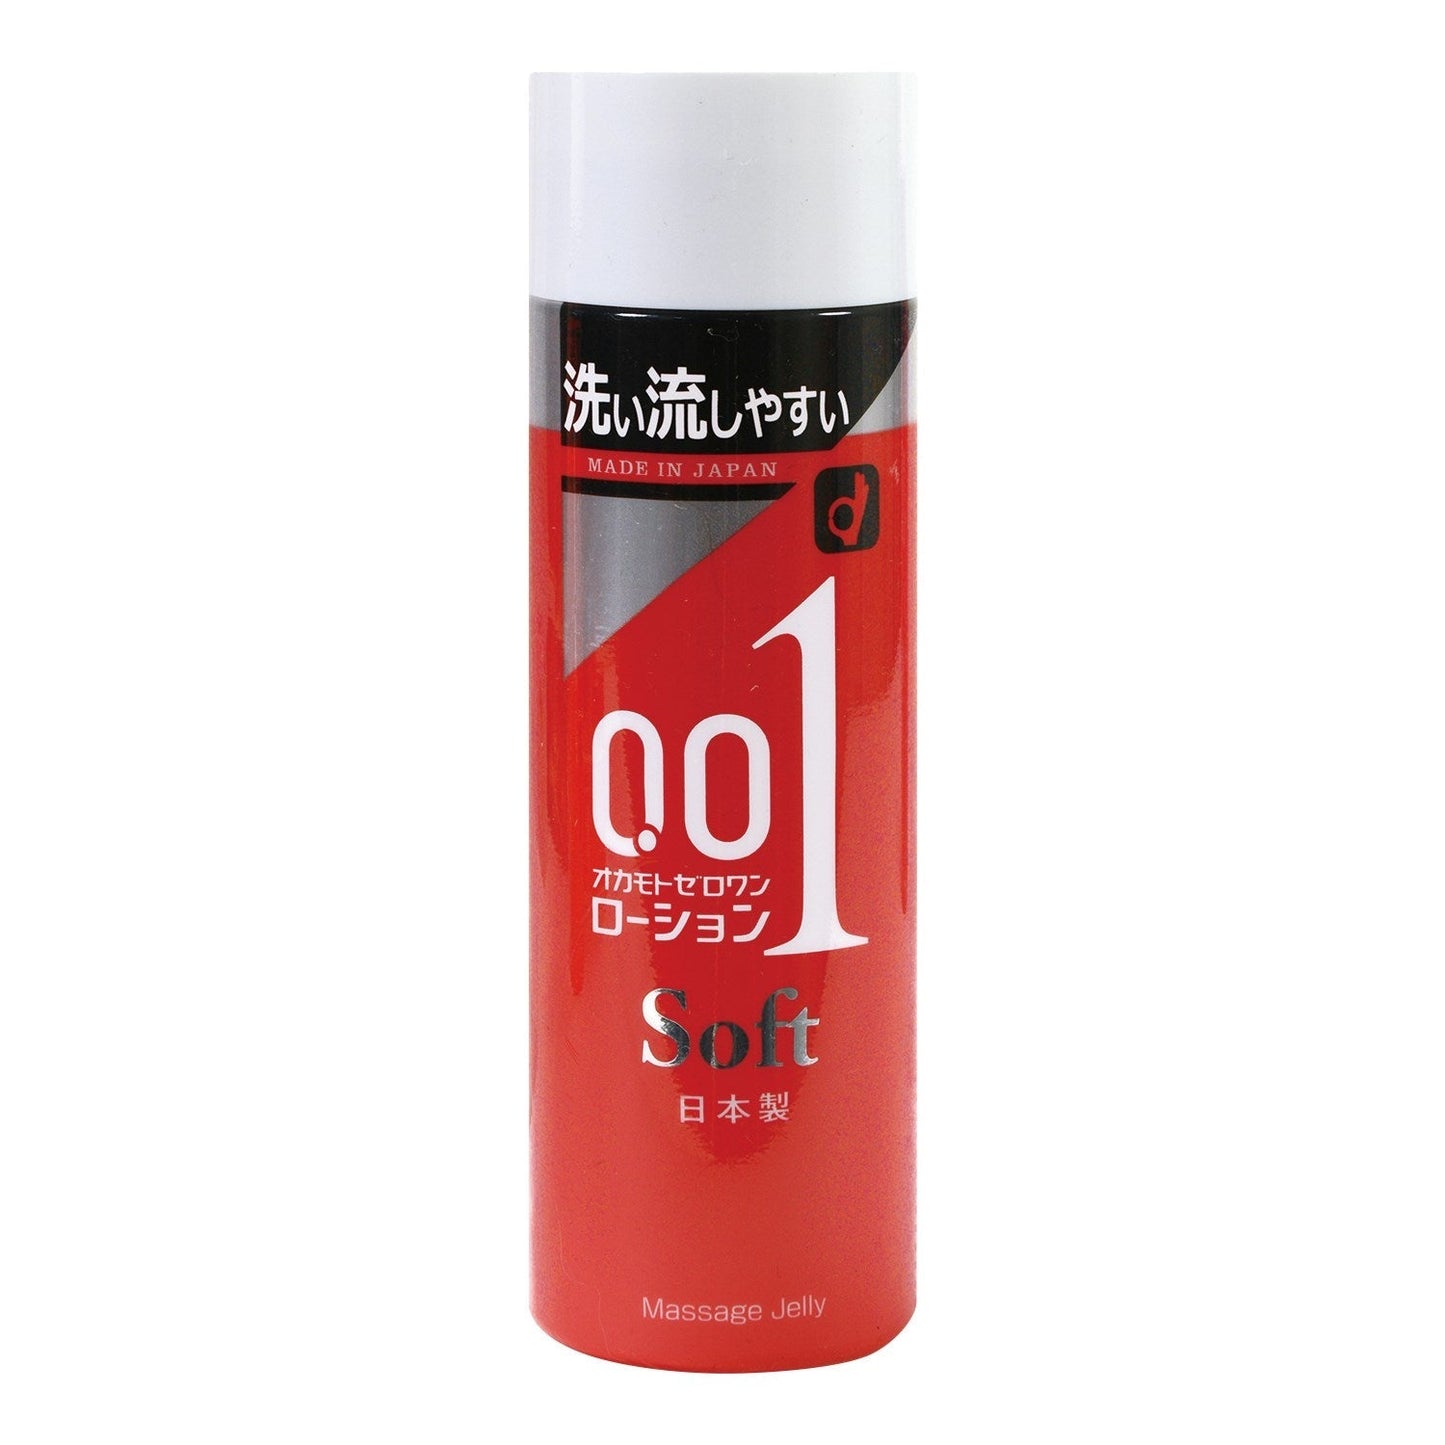 OKAMOTO 001 Soft 易清洗潤滑液 200 克 潤滑液 購買